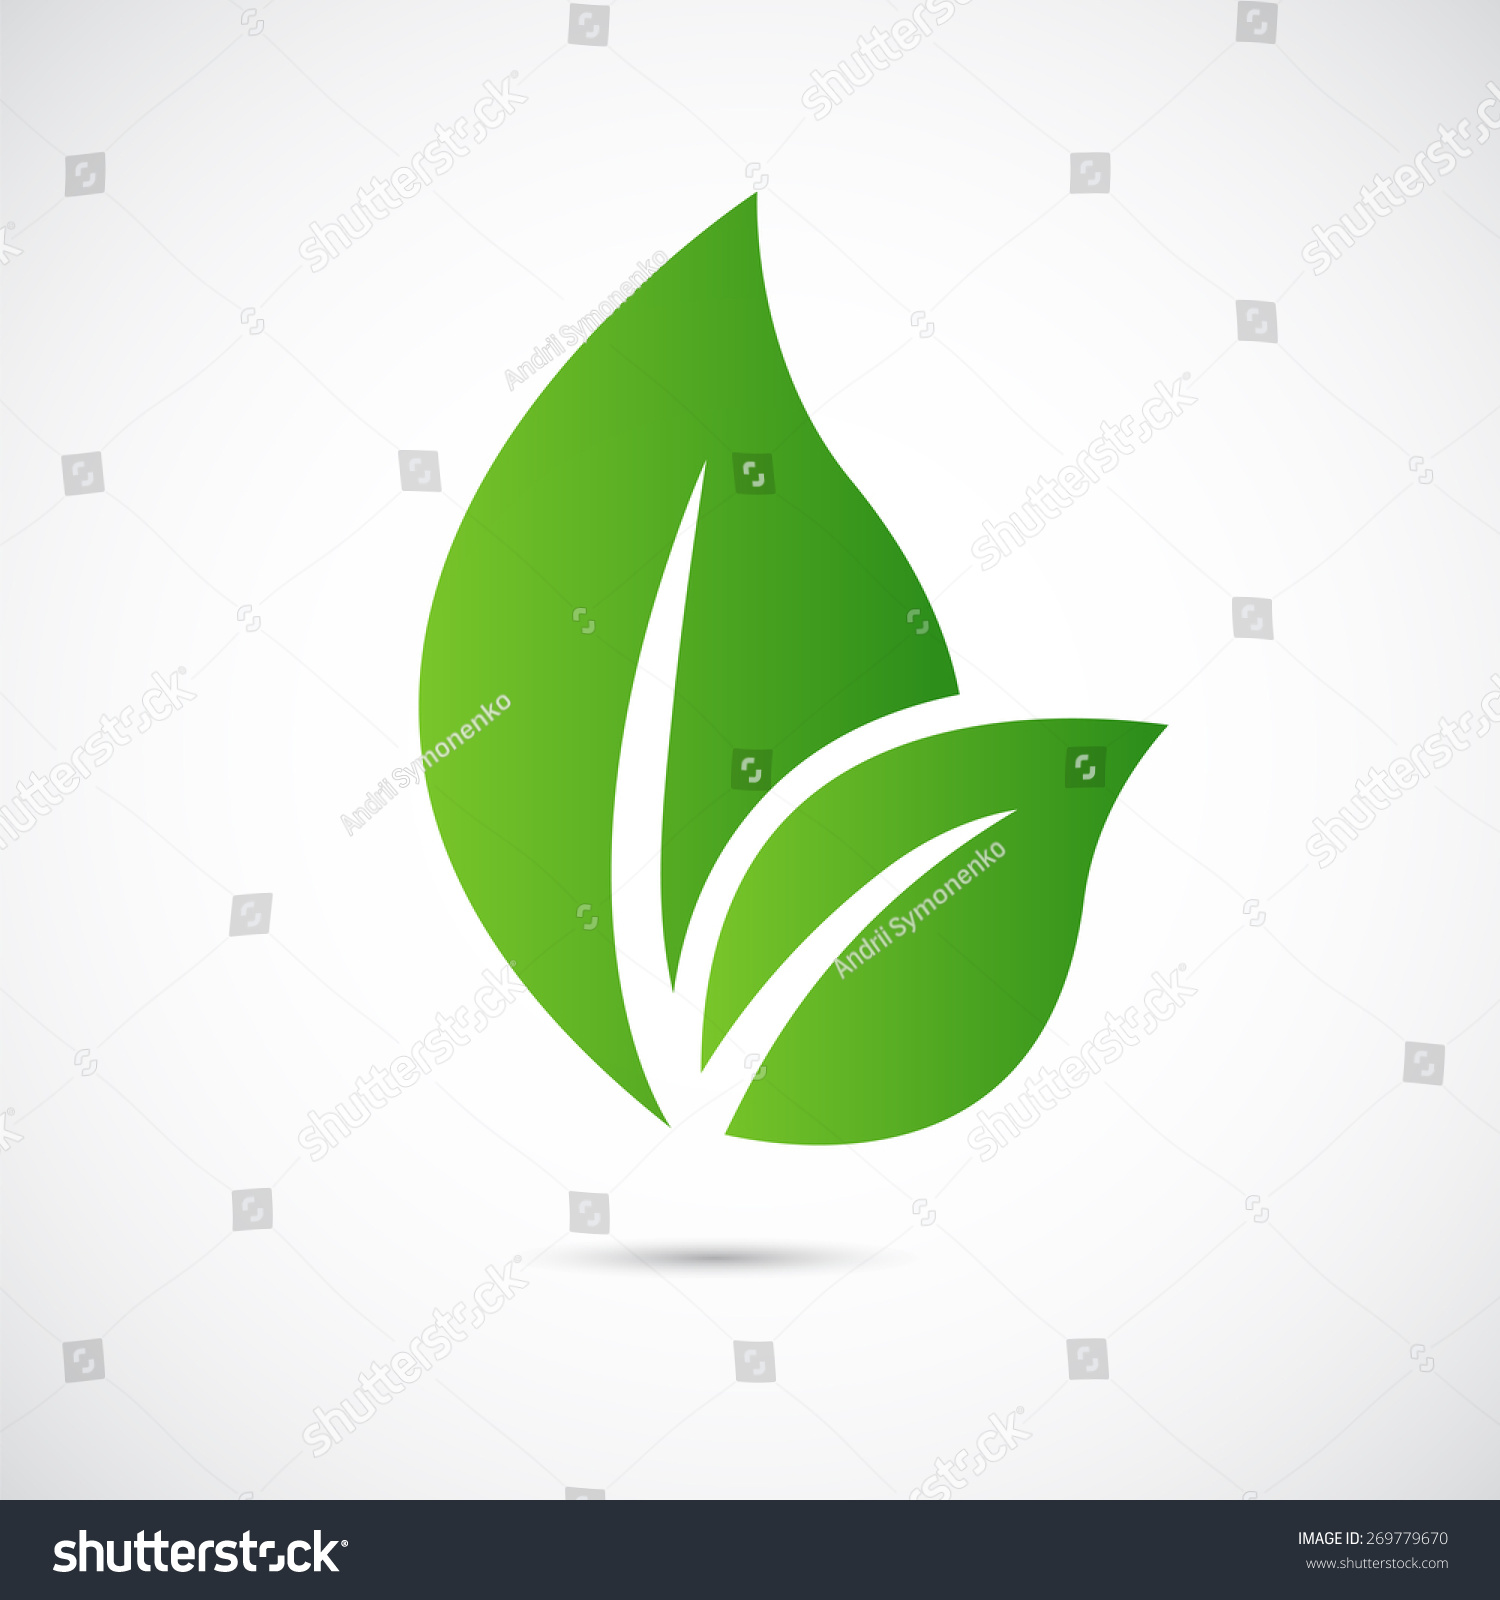 clipart green leaf logo icon - photo #34